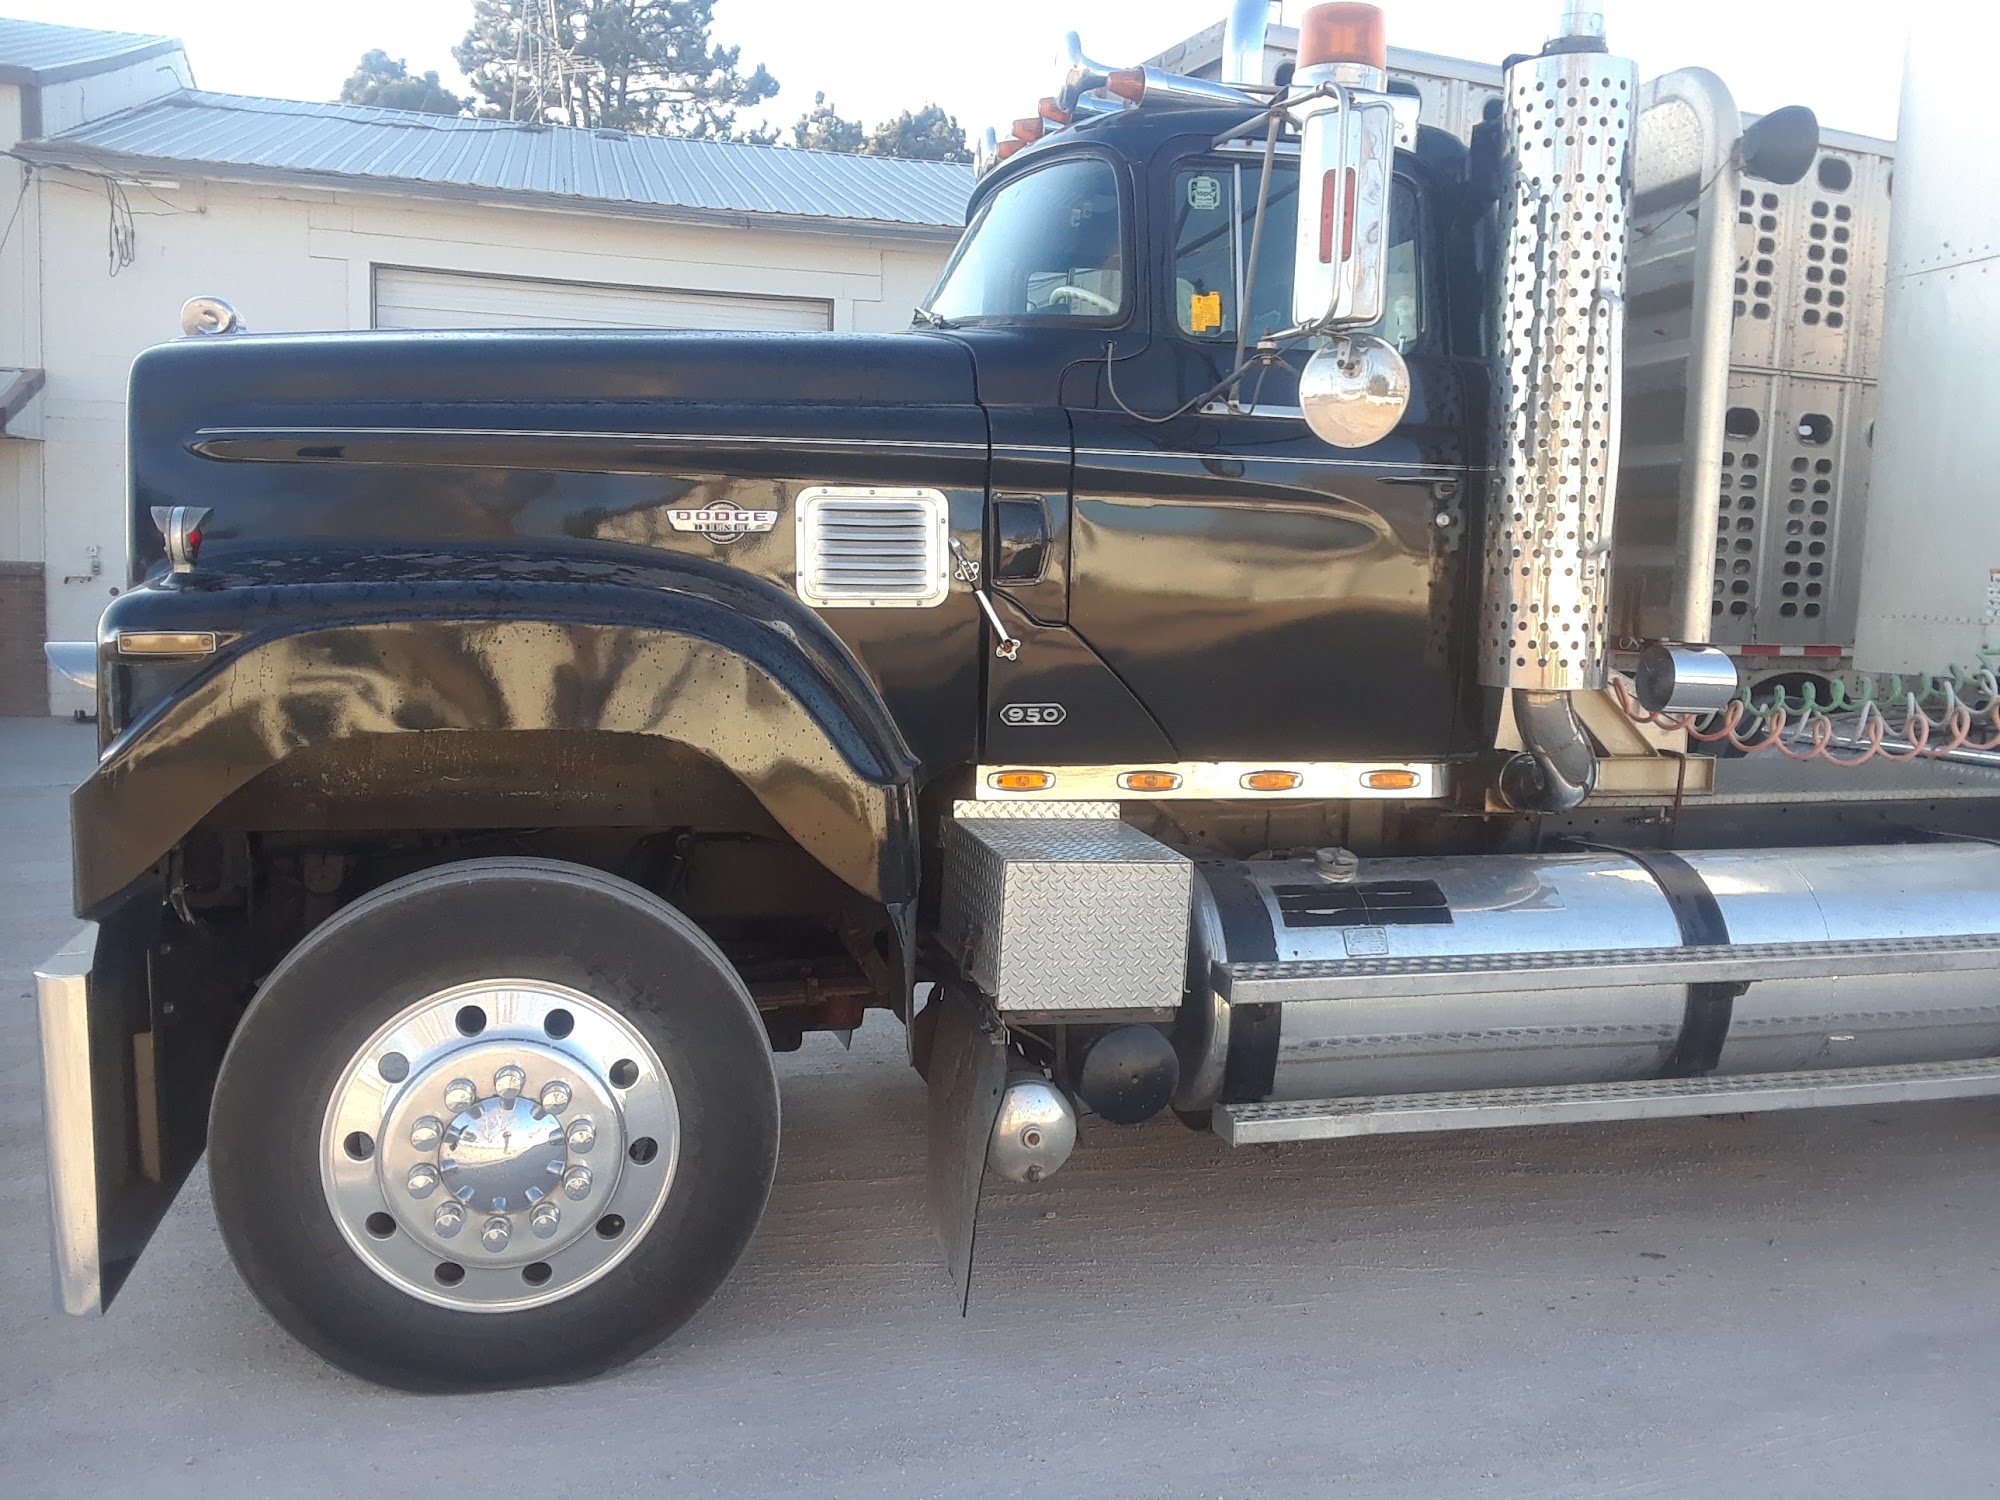 Huckfeldt Trucking Co 480 W 19th Ave, Torrington Wyoming 82240